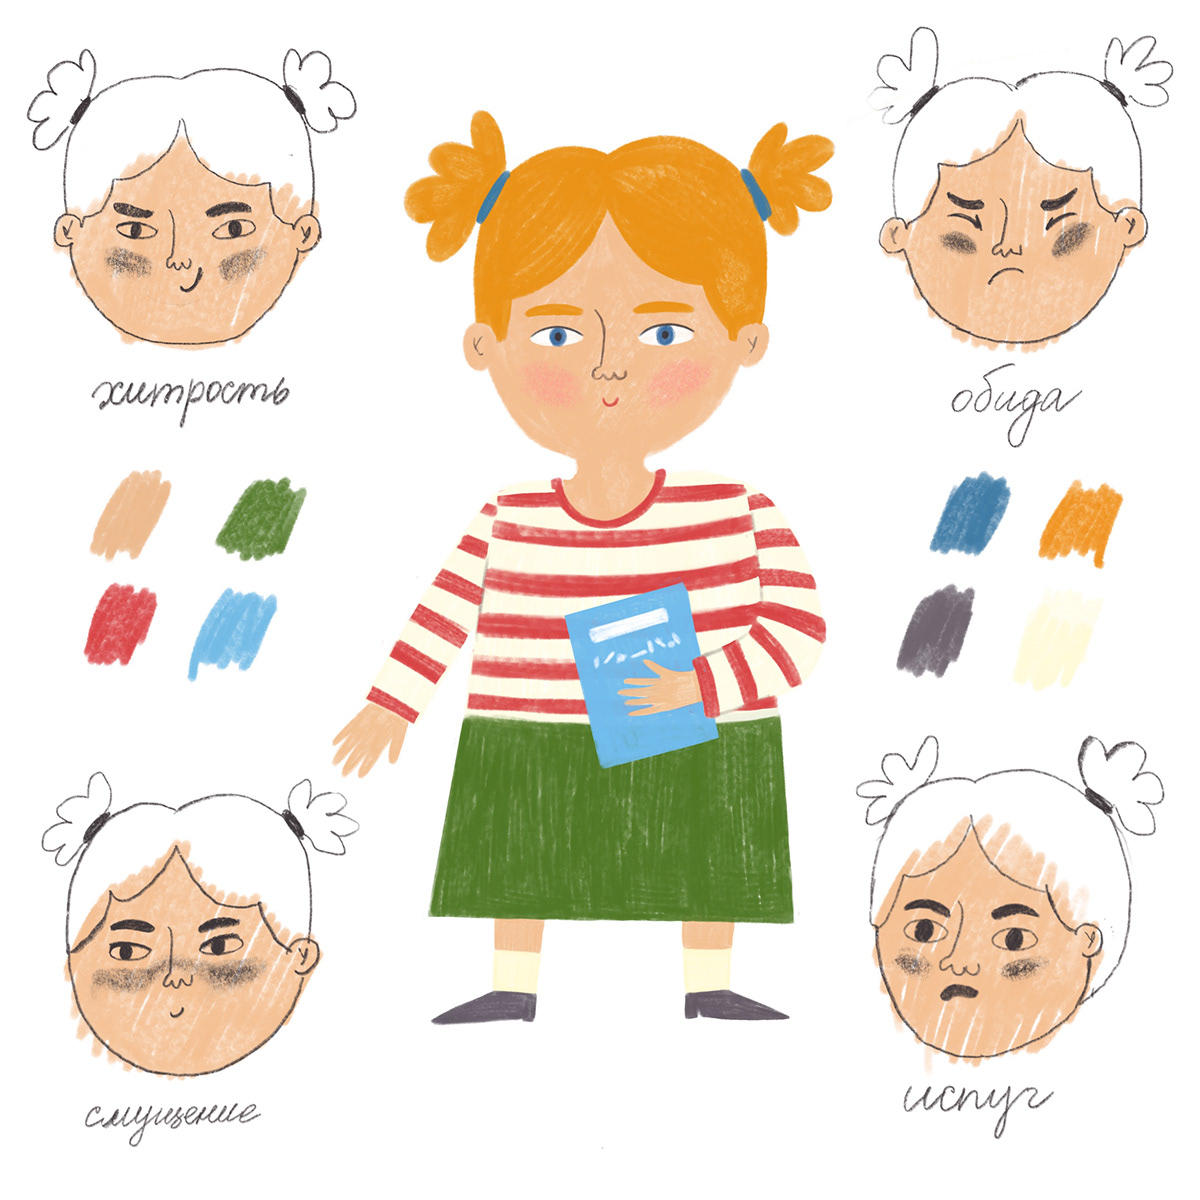 book Character Character design  children illustration детская иллюстрация ДИЗАЙН ПЕРСОНАЖЕЙ персонаж